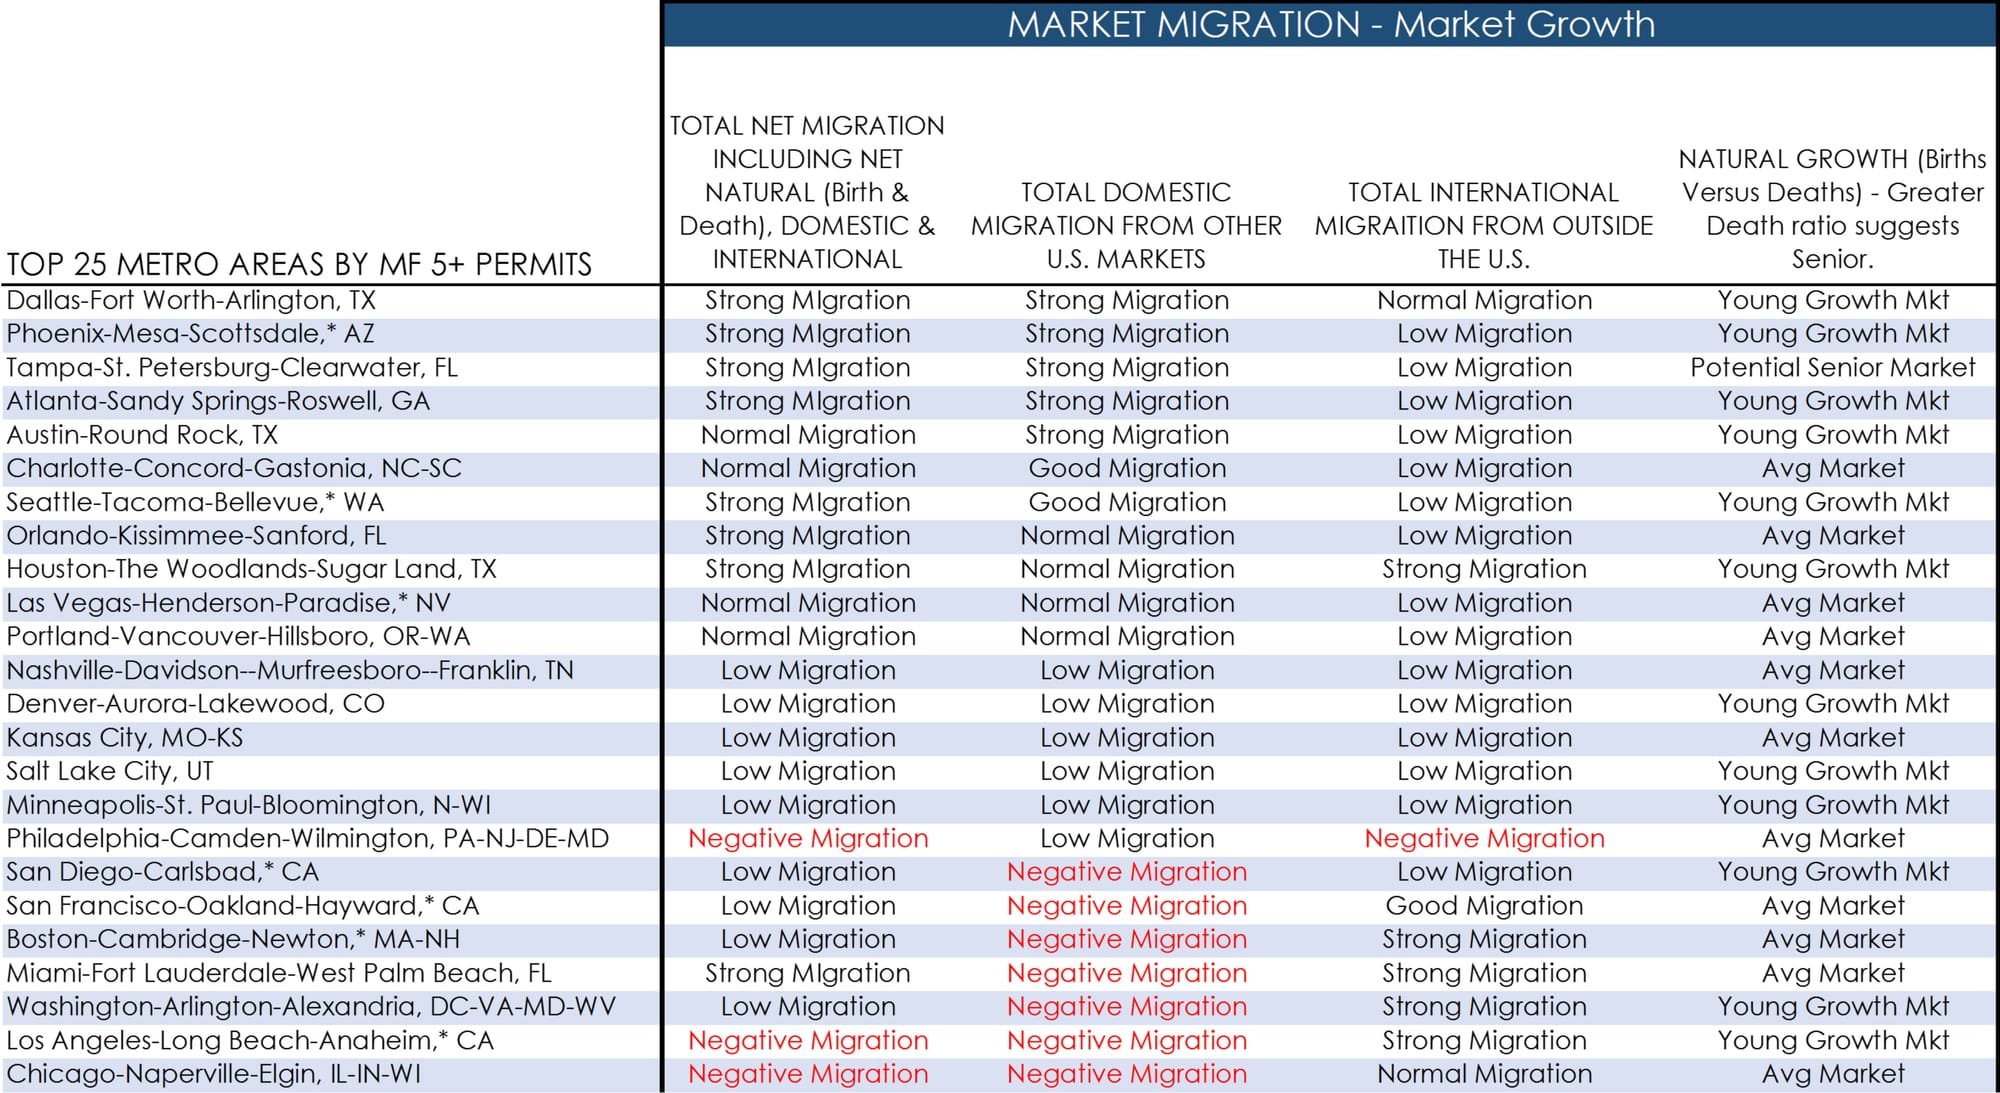 Market Migration - Growth